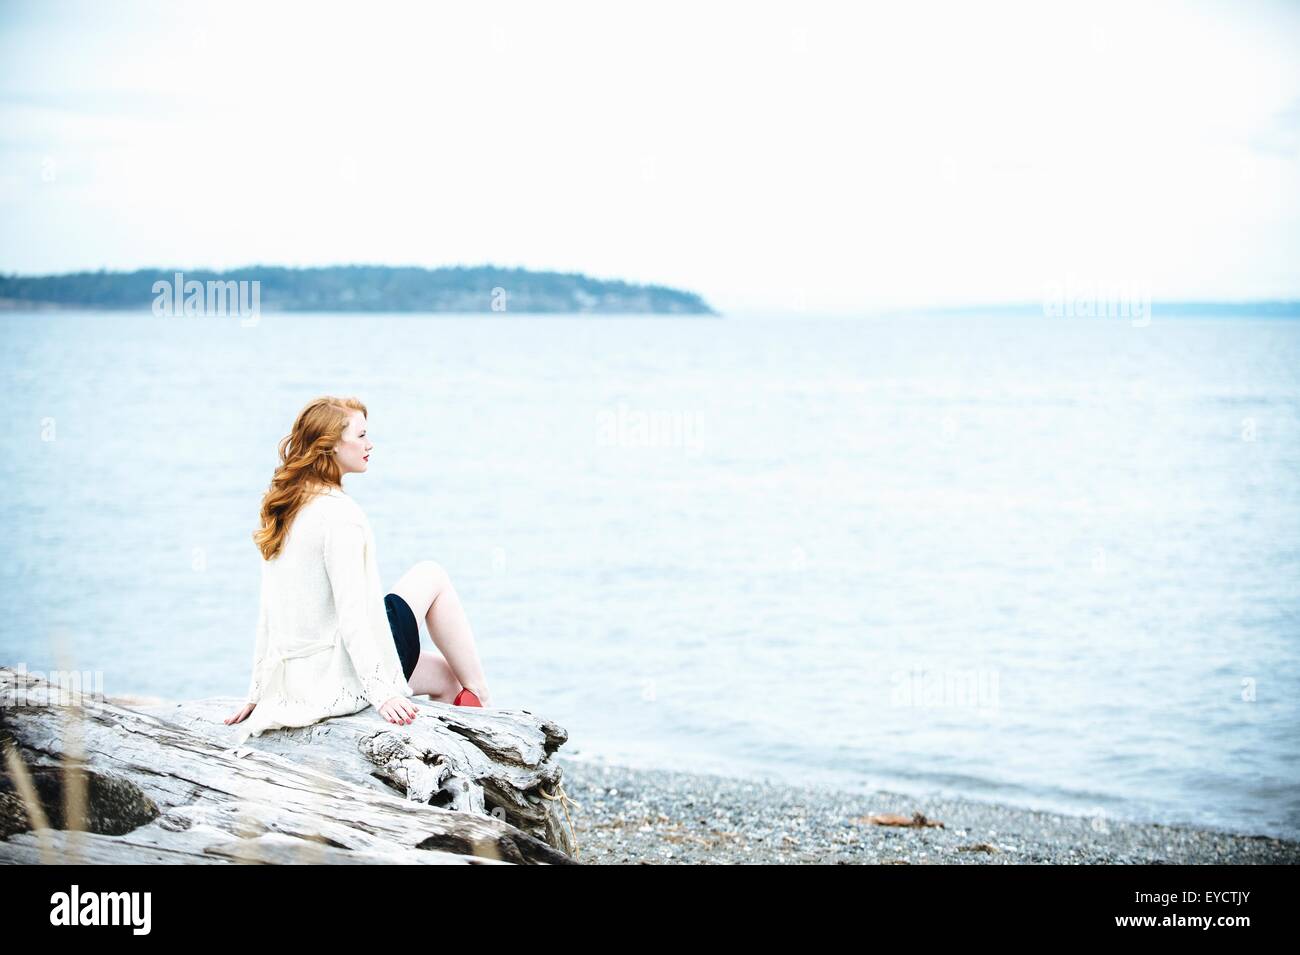 Young woman sitting on beach looking out to sea, Bainbridge Island, Washington State, USA Stock Photo